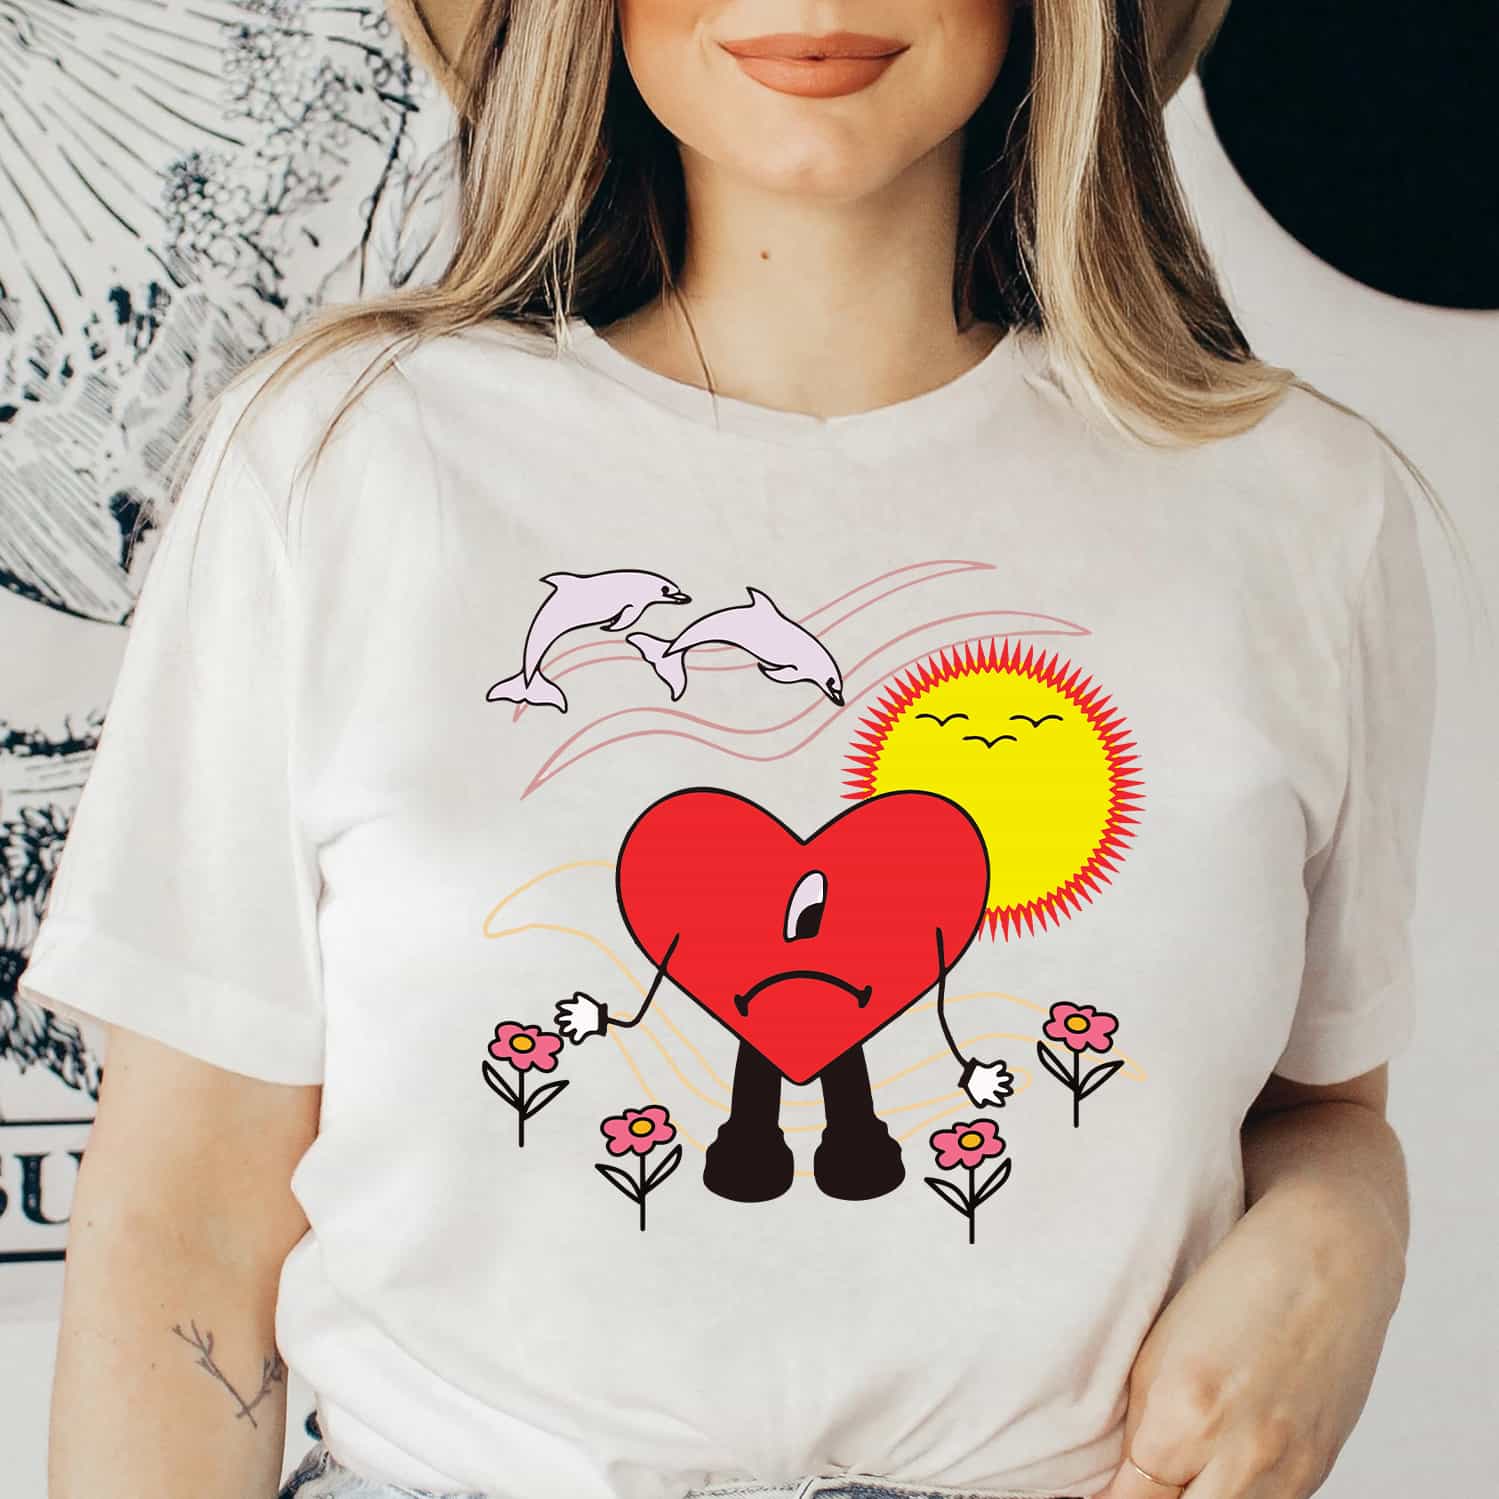 Bad Bunny Heart Shirt, Un Verano Sin Ti Album, Bad Bunny Graphic Tee -  Happy Place for Music Lovers